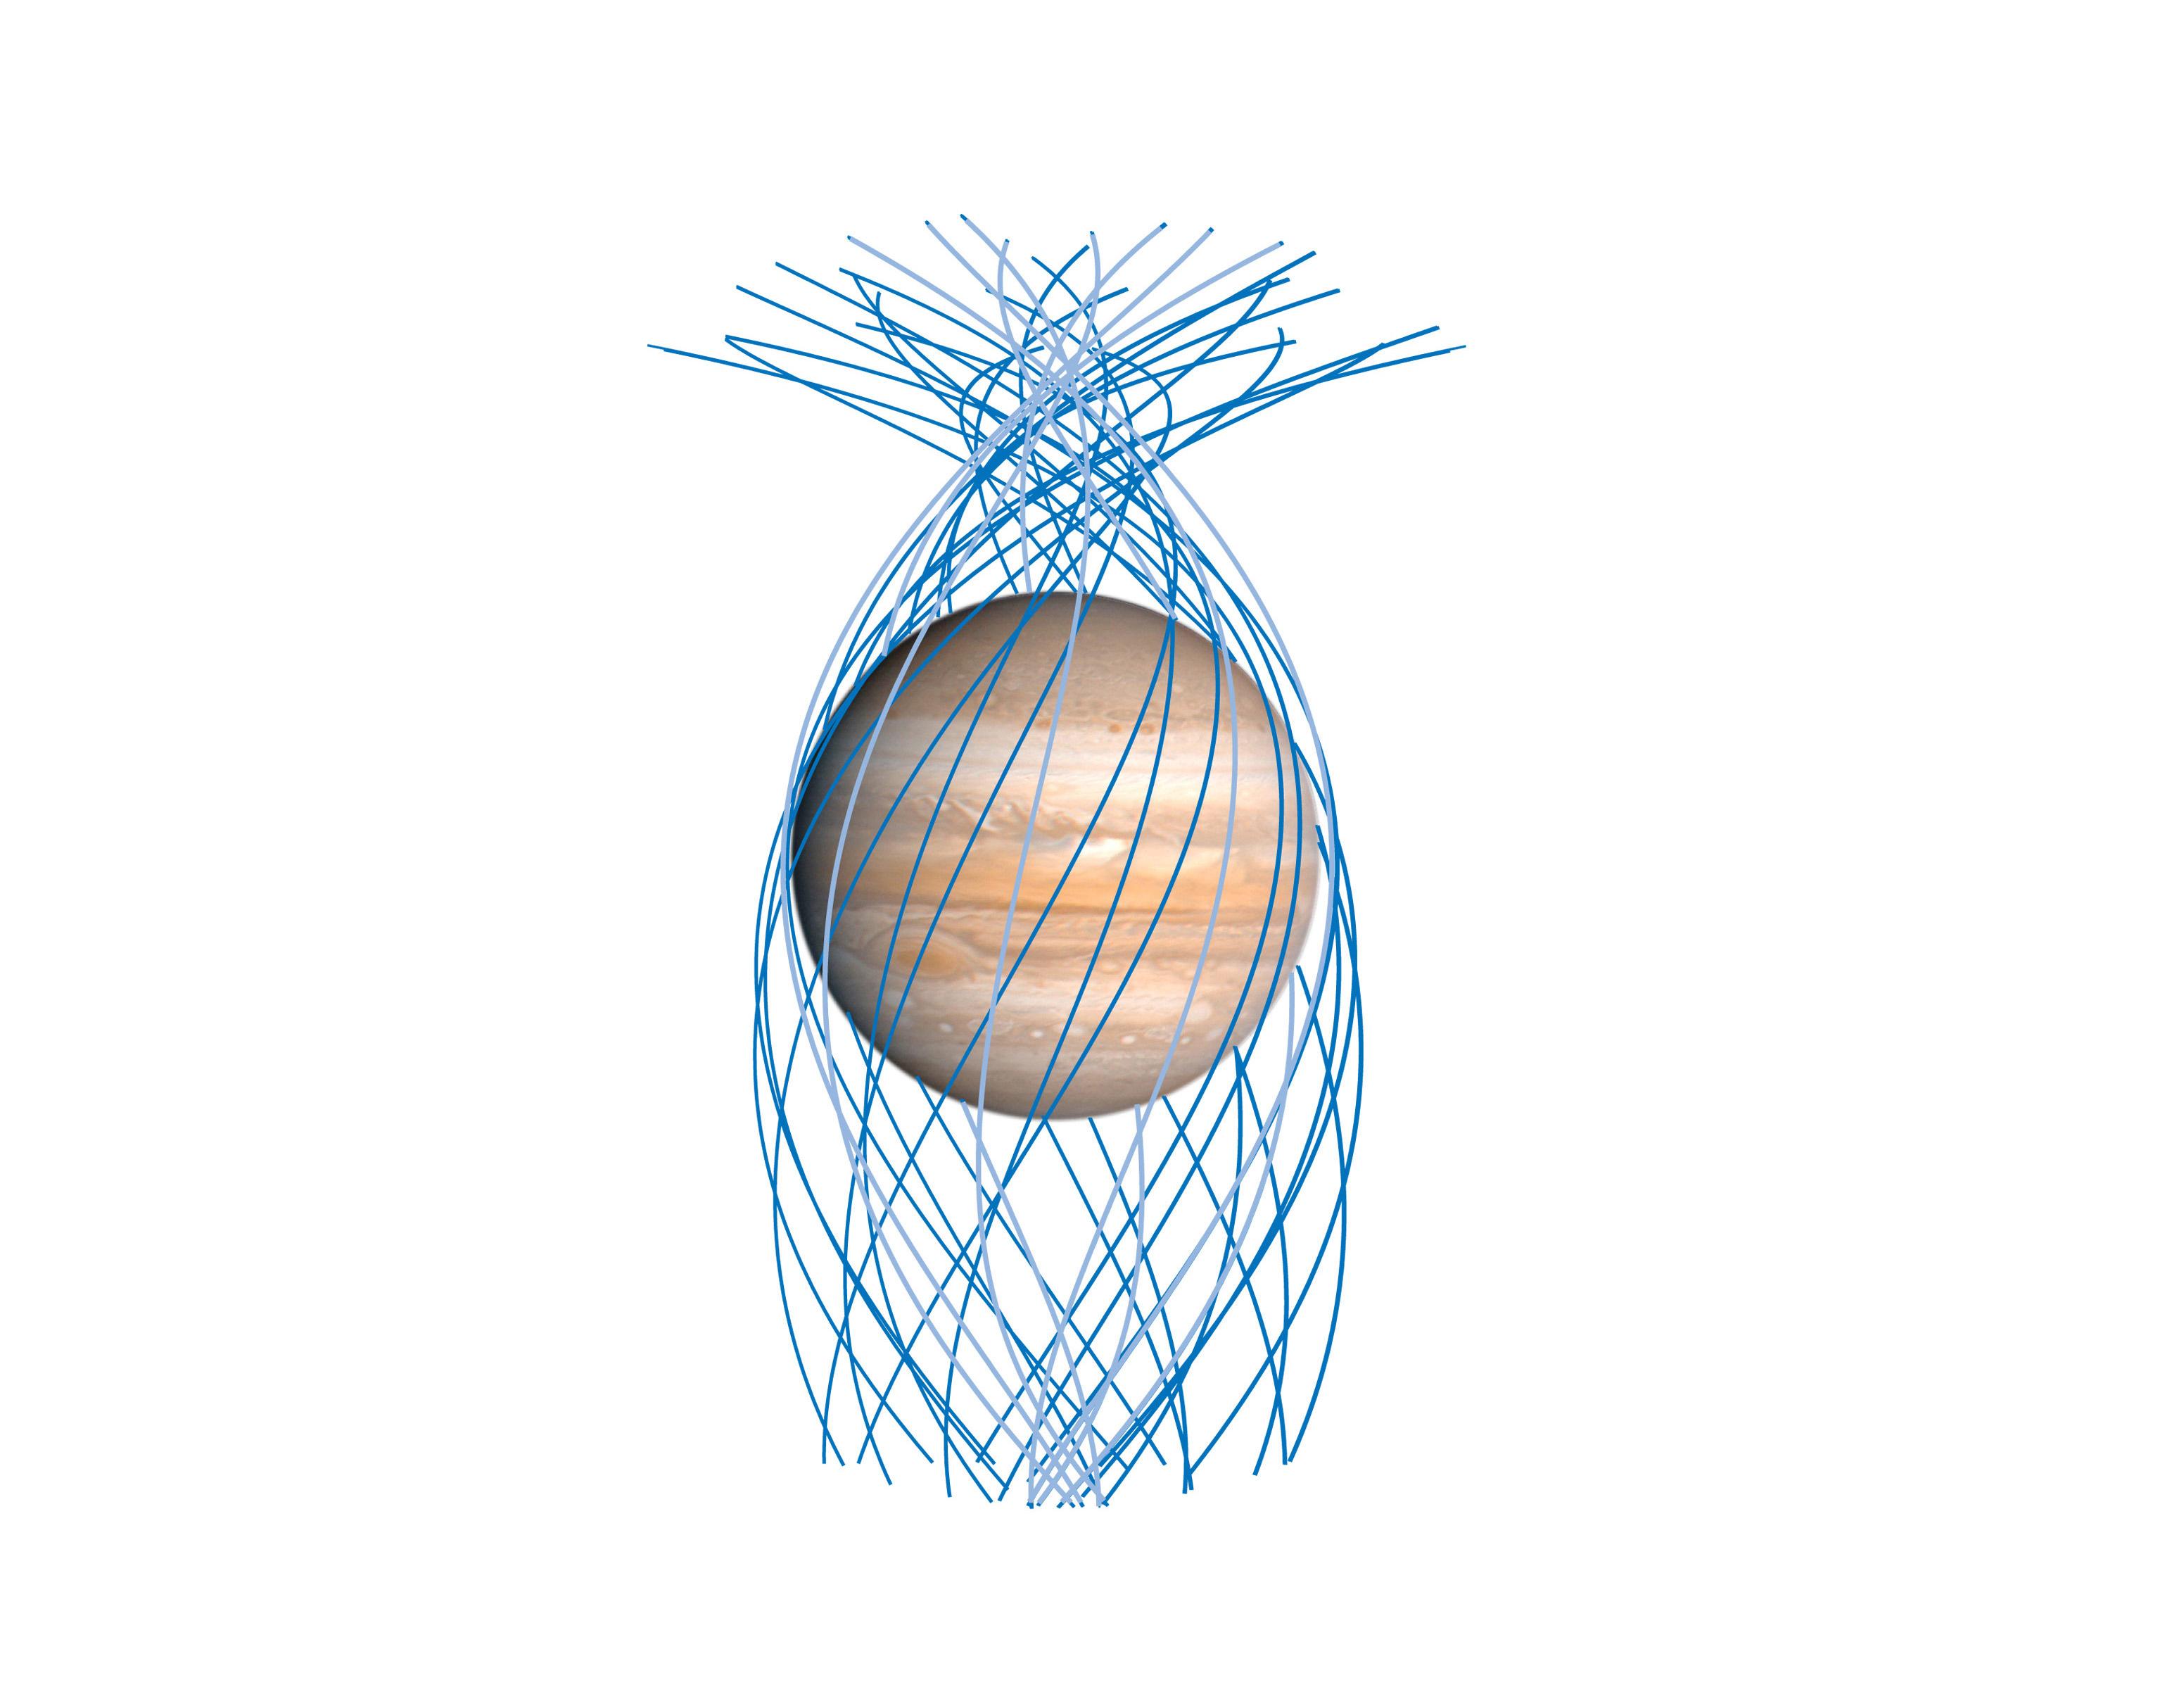 PIA25061: Five Years of Juno Orbits